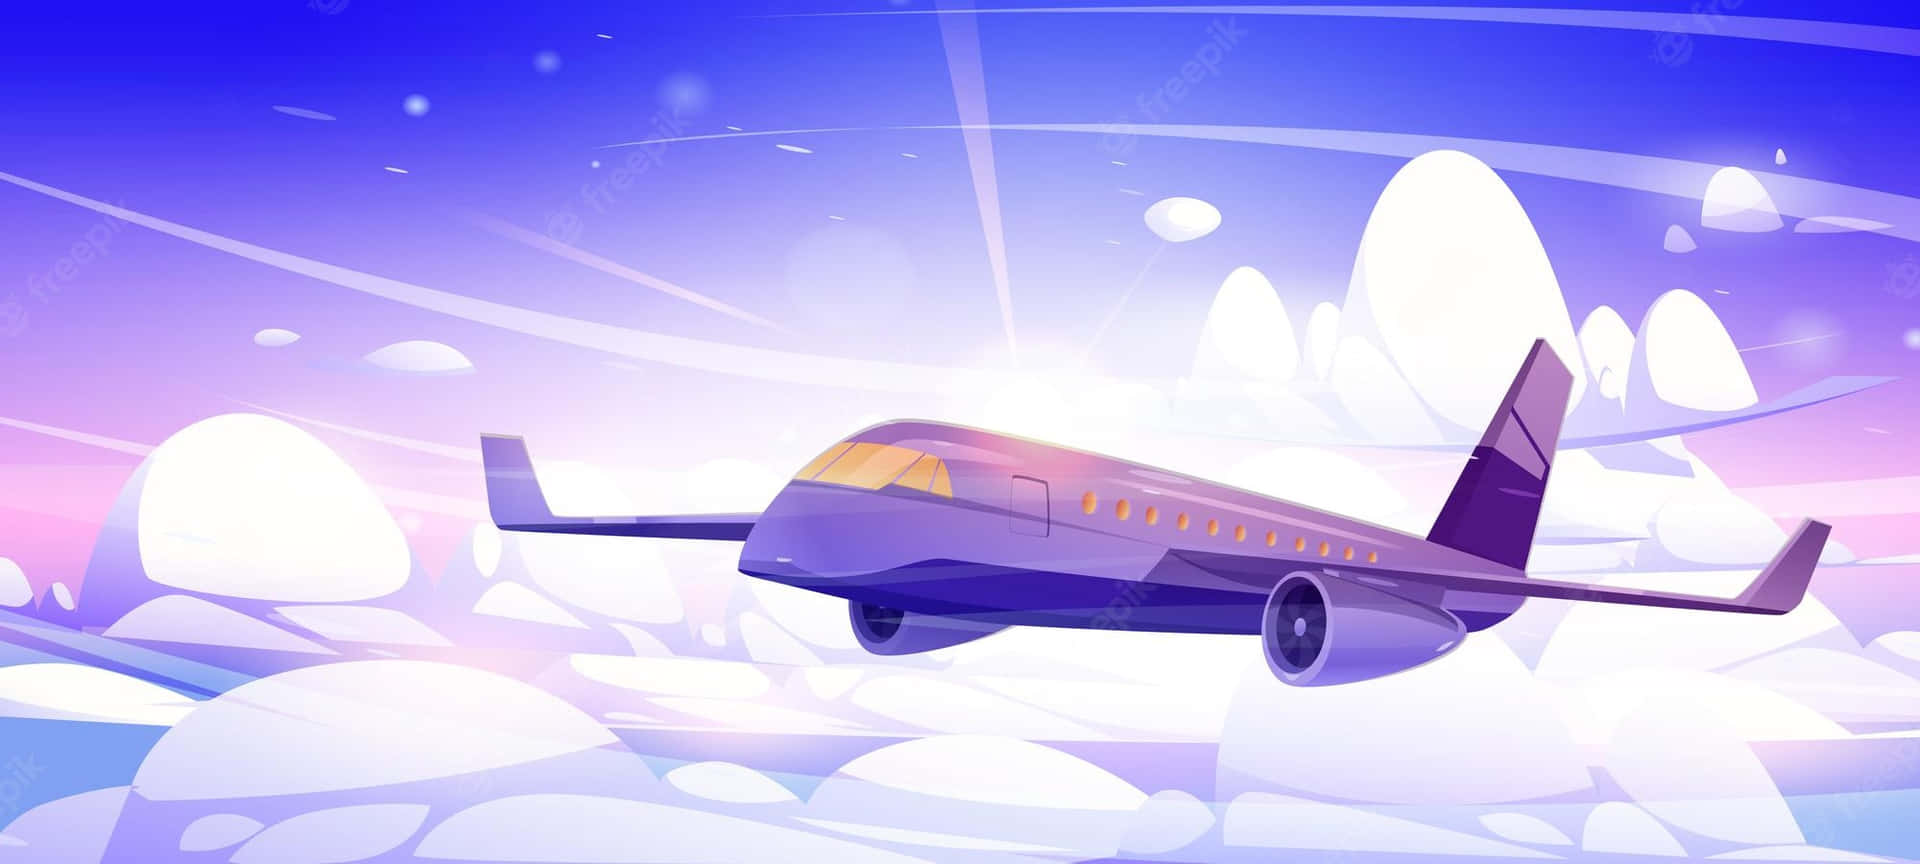 Purple Plane Background Digital Art Wallpaper